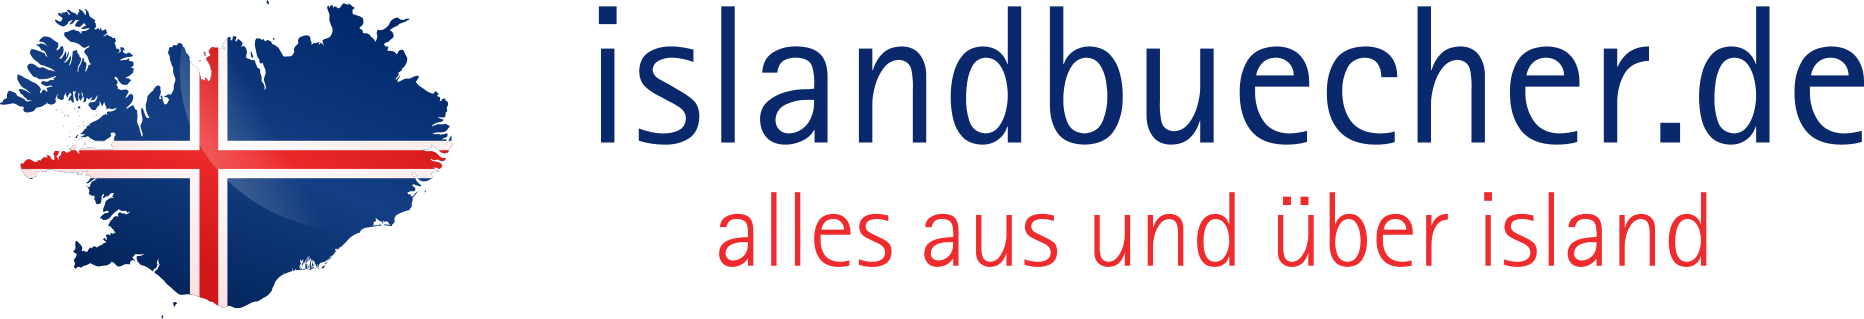 Logo islandbiecher.de